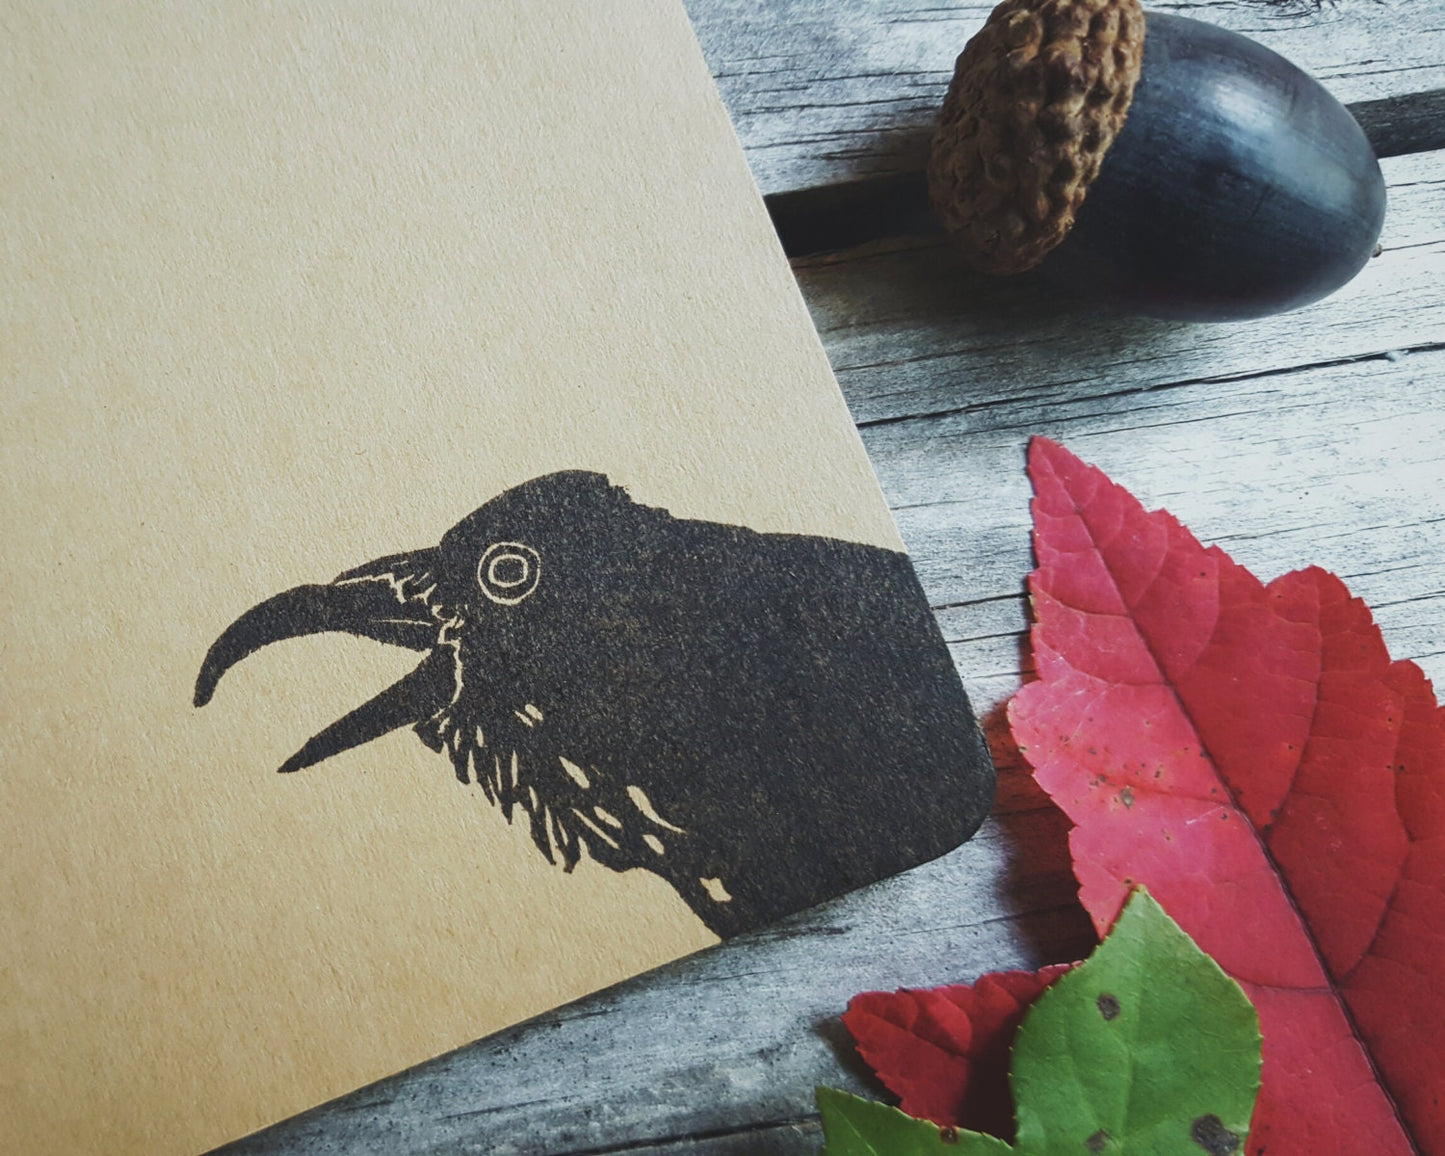 Crow Notebook